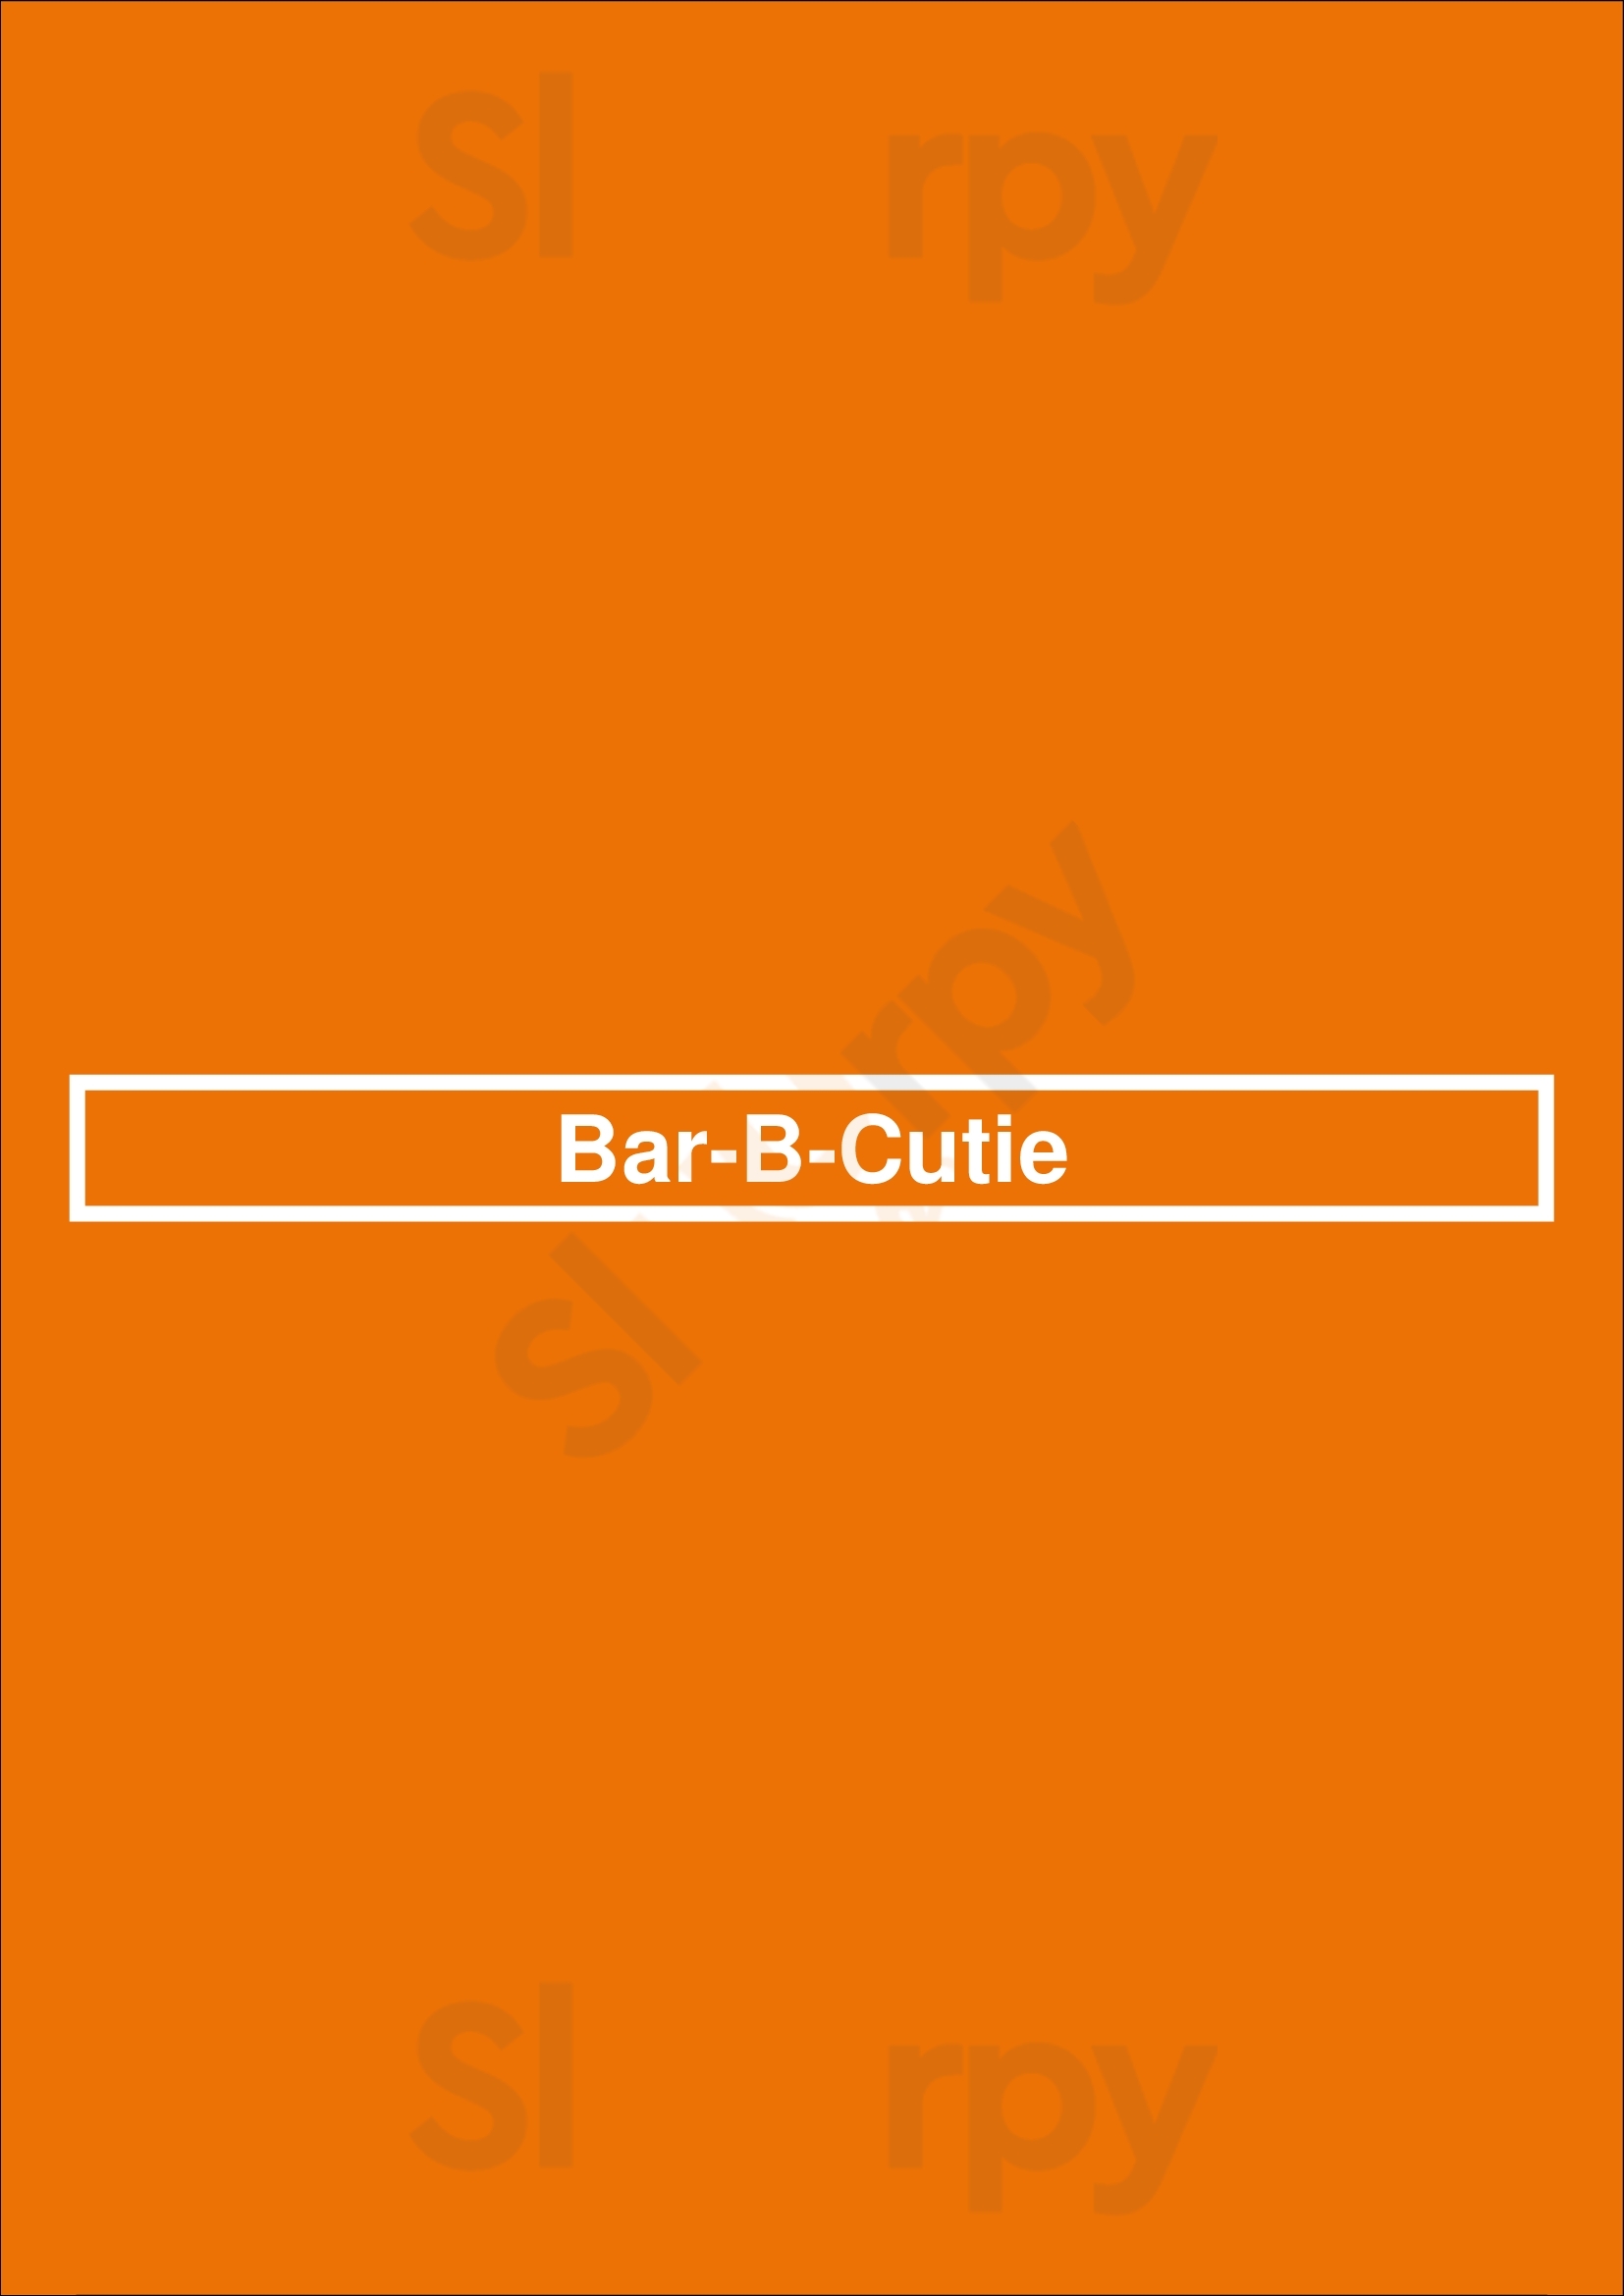 Bar-b-cutie Nashville Menu - 1